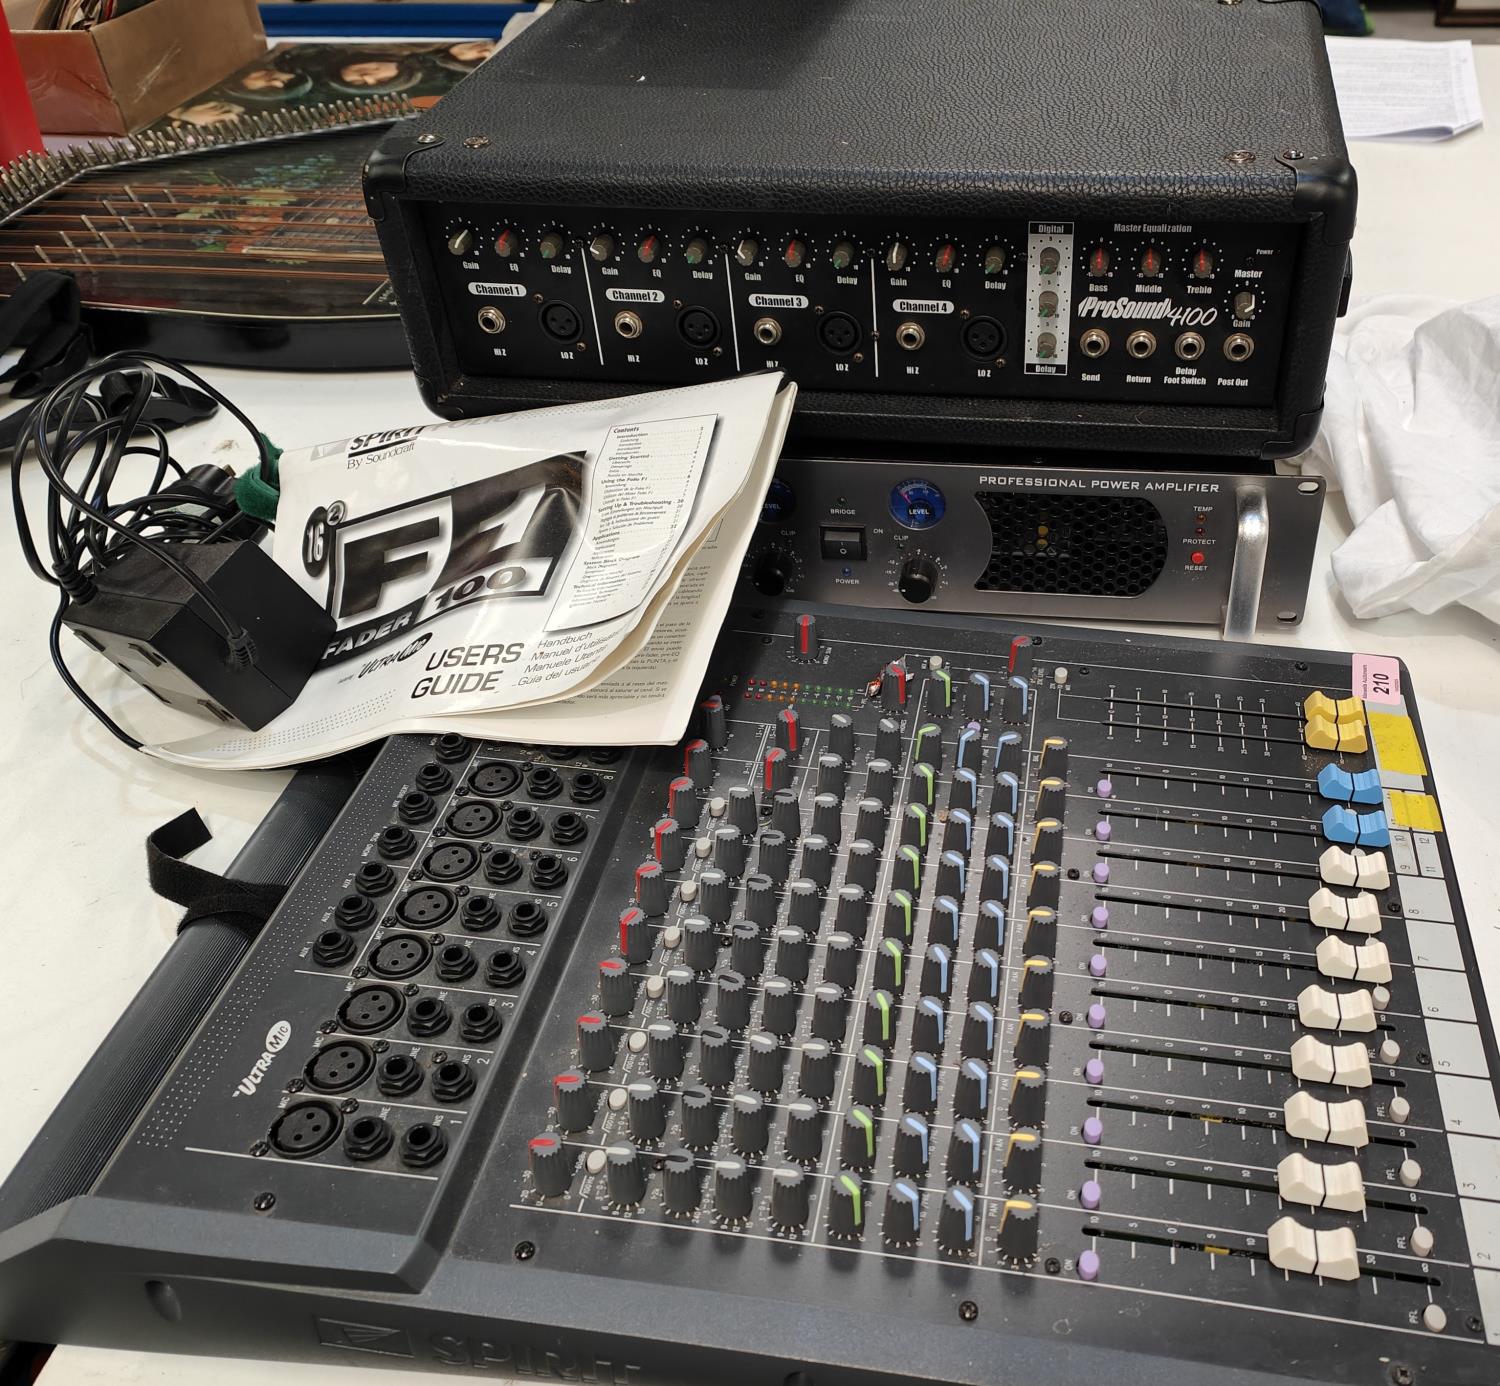 A Prosound 1600 Professional power amplifier; Prosound 4100 and a Spirit Folio Ultra Mic Mixing